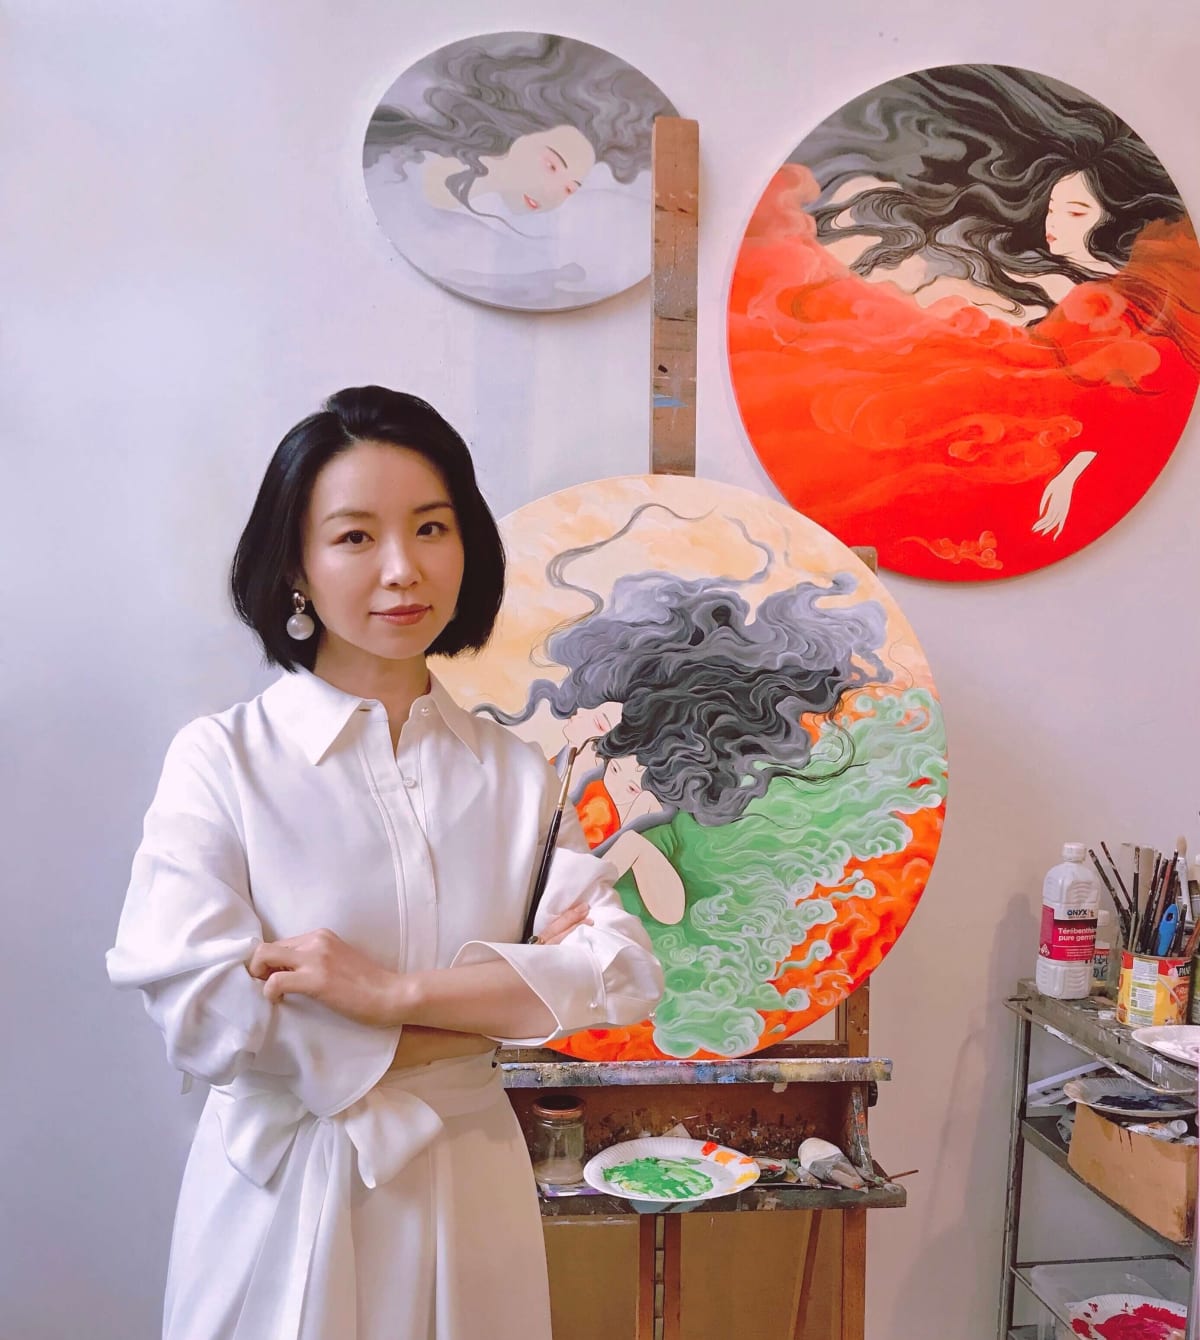 wang jojo contemporary Japanese woman painting art exhibition art yi gallery brussels